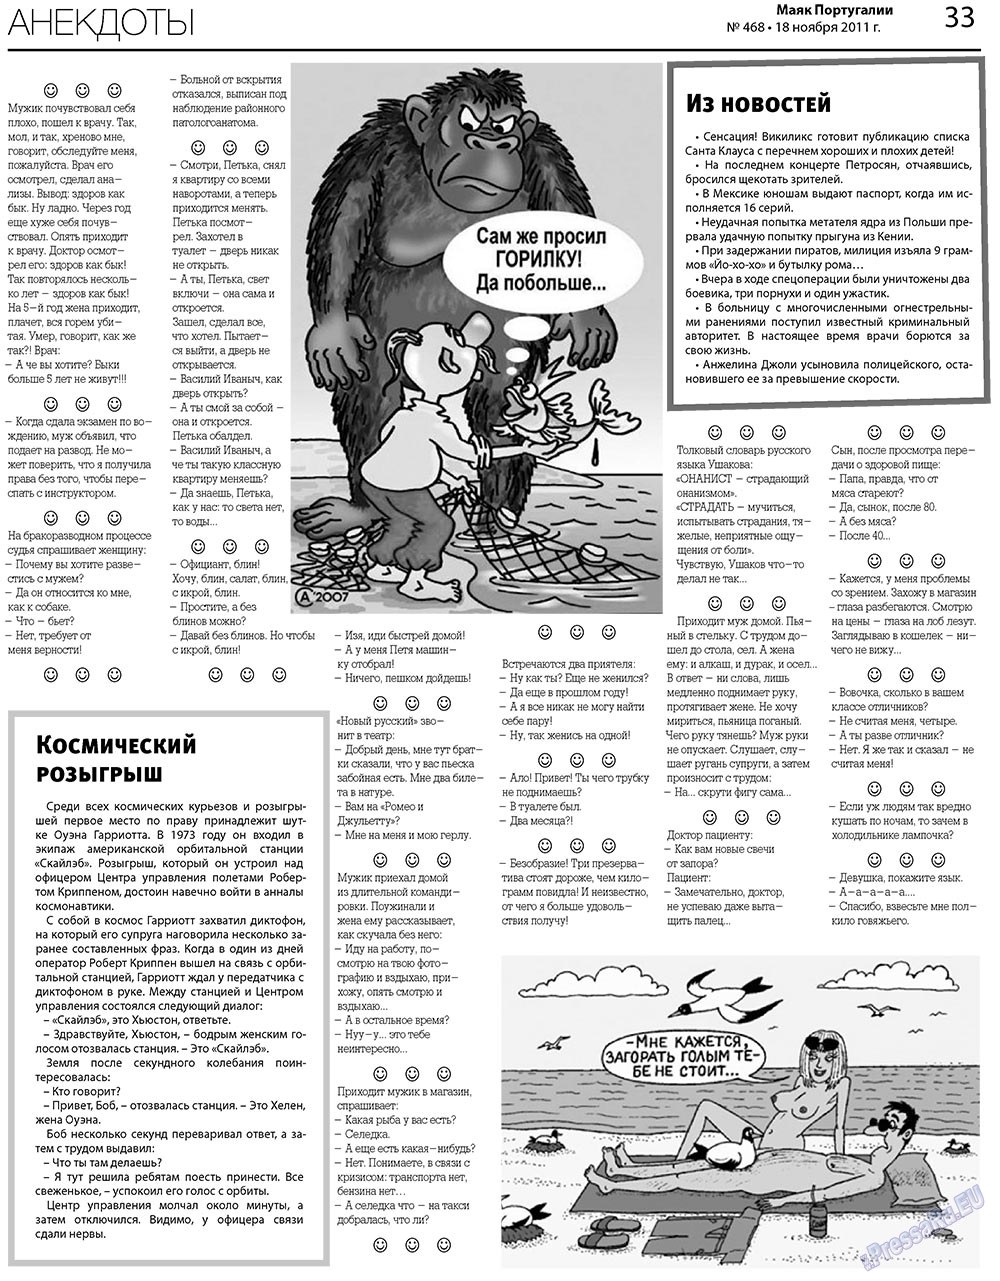 Маяк Португалии, газета. 2011 №468 стр.33